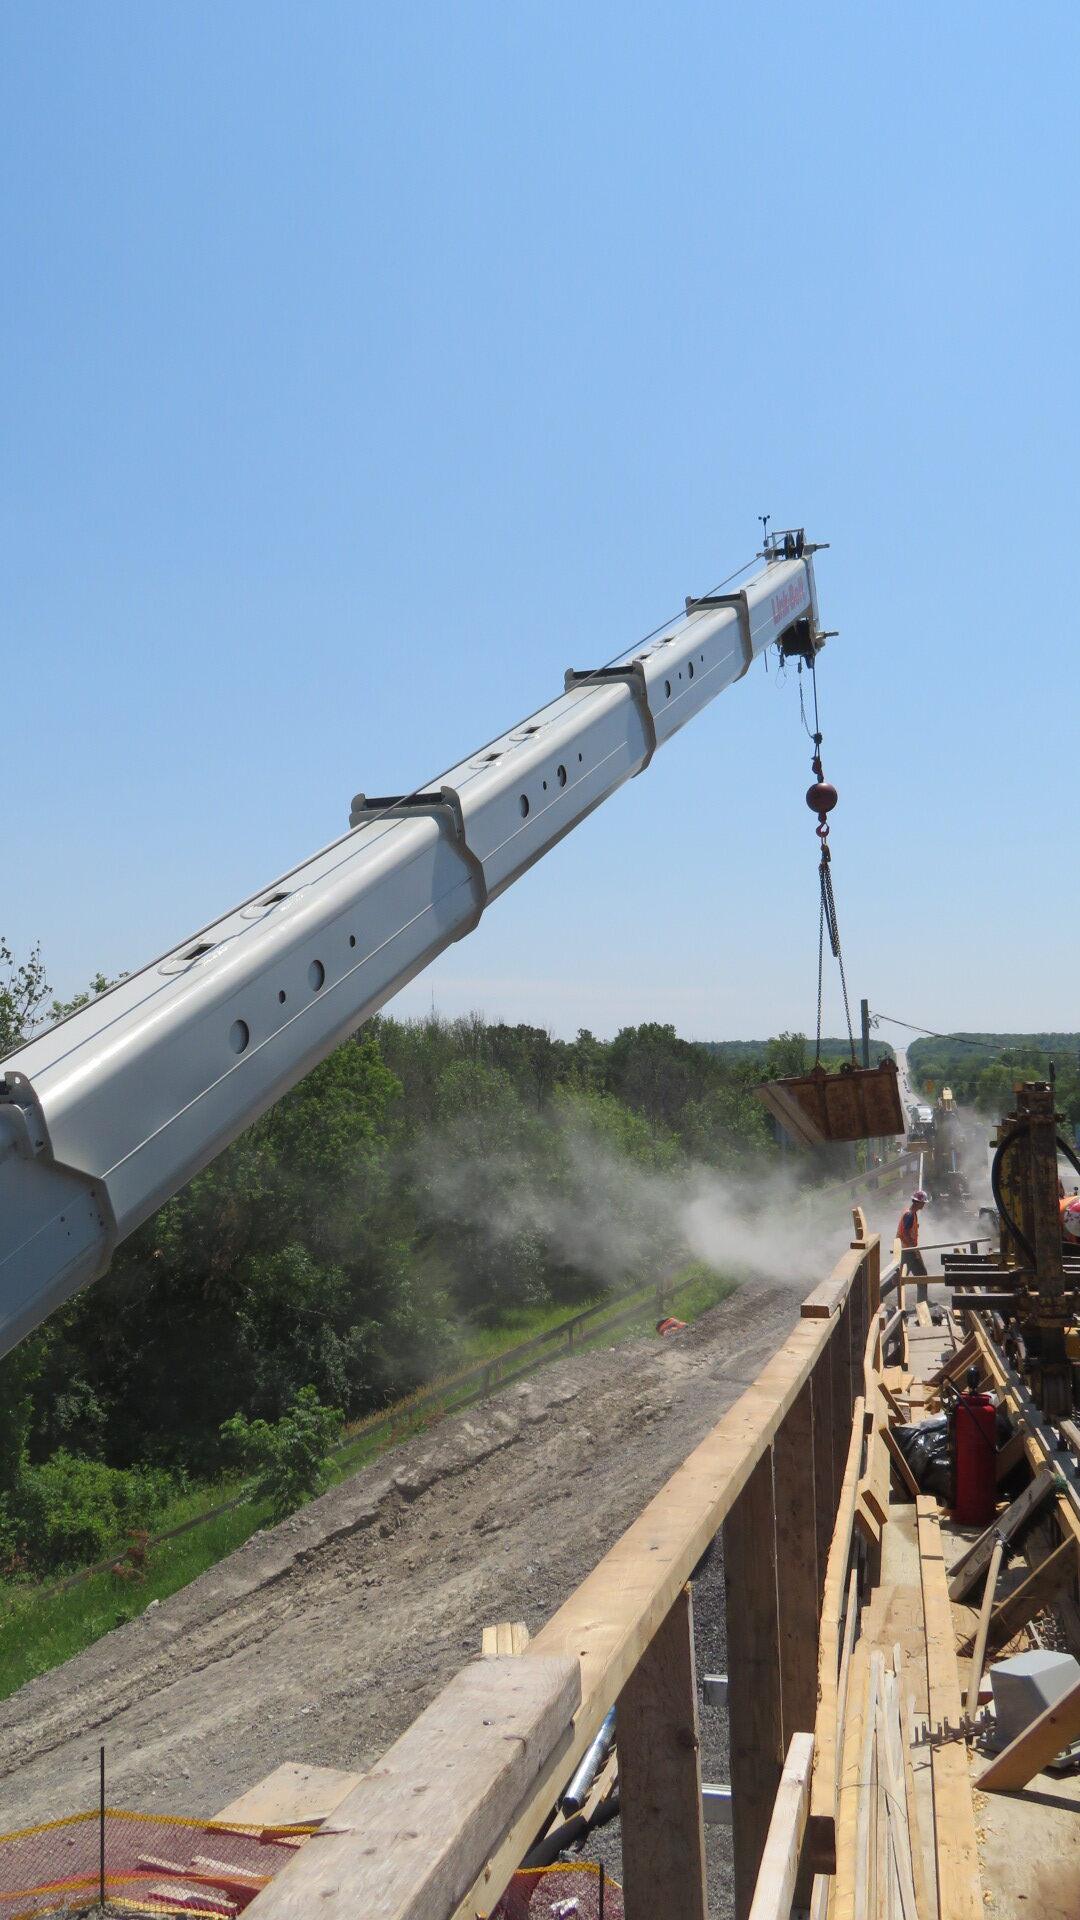 160-ton crane starting to lift the debris bin